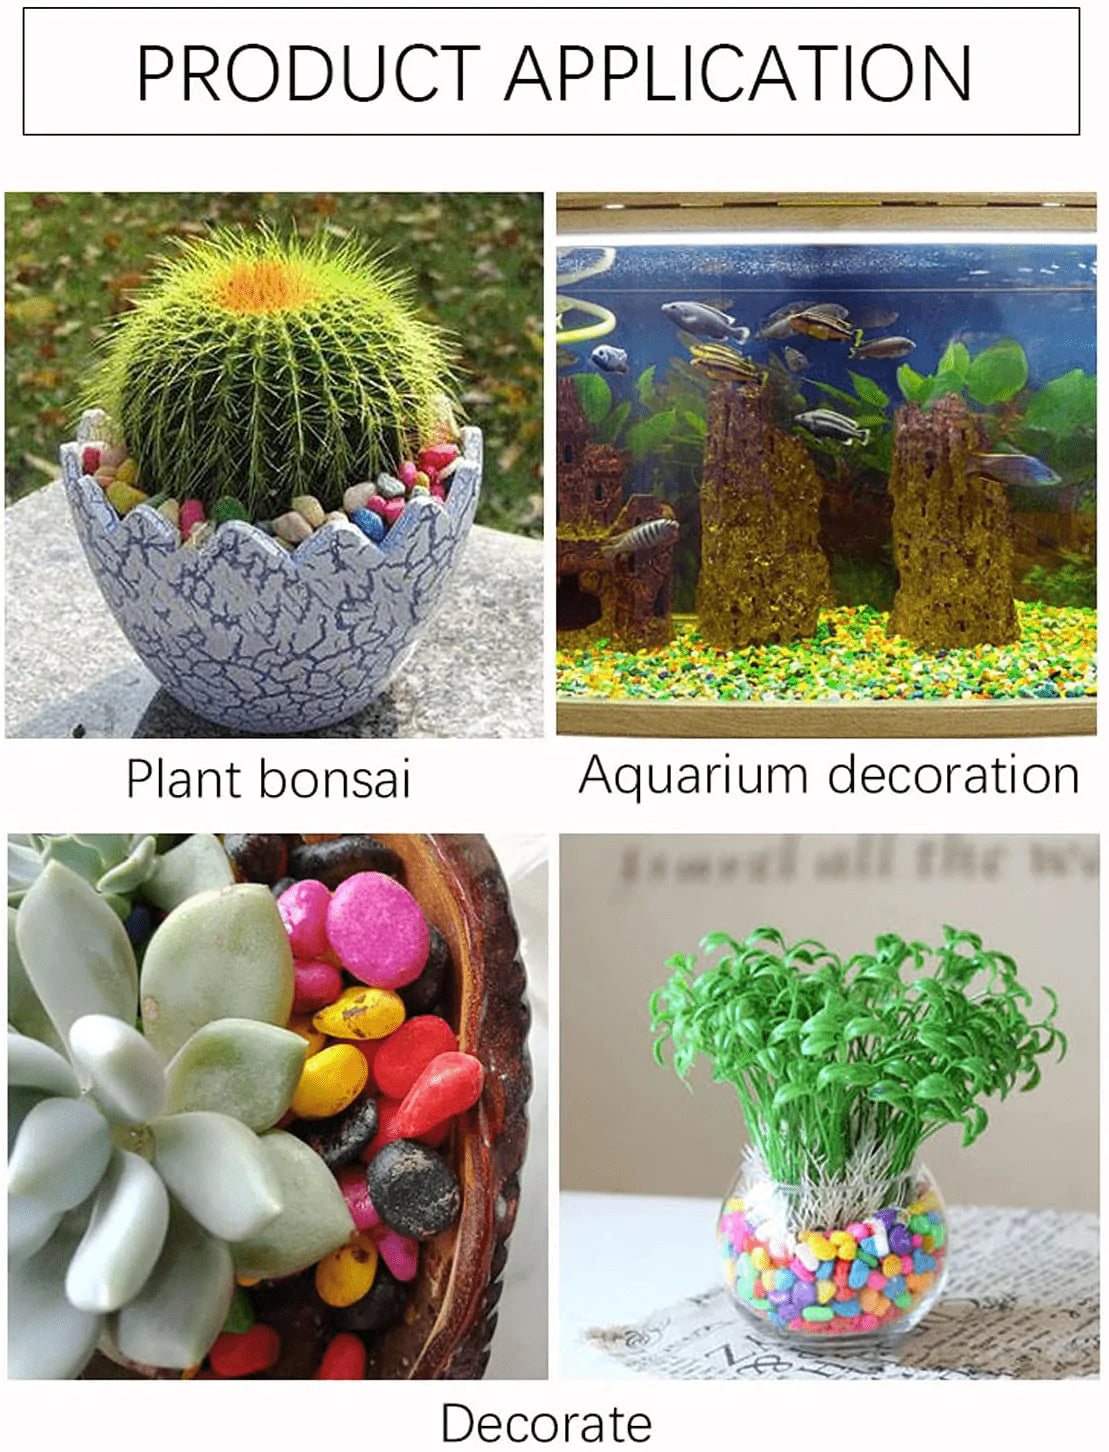 ZYFHSGS 2.2Lb Fish Tank Rocks Cactus Potting Soil Gravel Soil Cover for Aquariums Decorative Pebbles for Garden/Fish Tank/Aquarium/Vase Fillers/Tillandsia/Cactus/Terrarium Plants